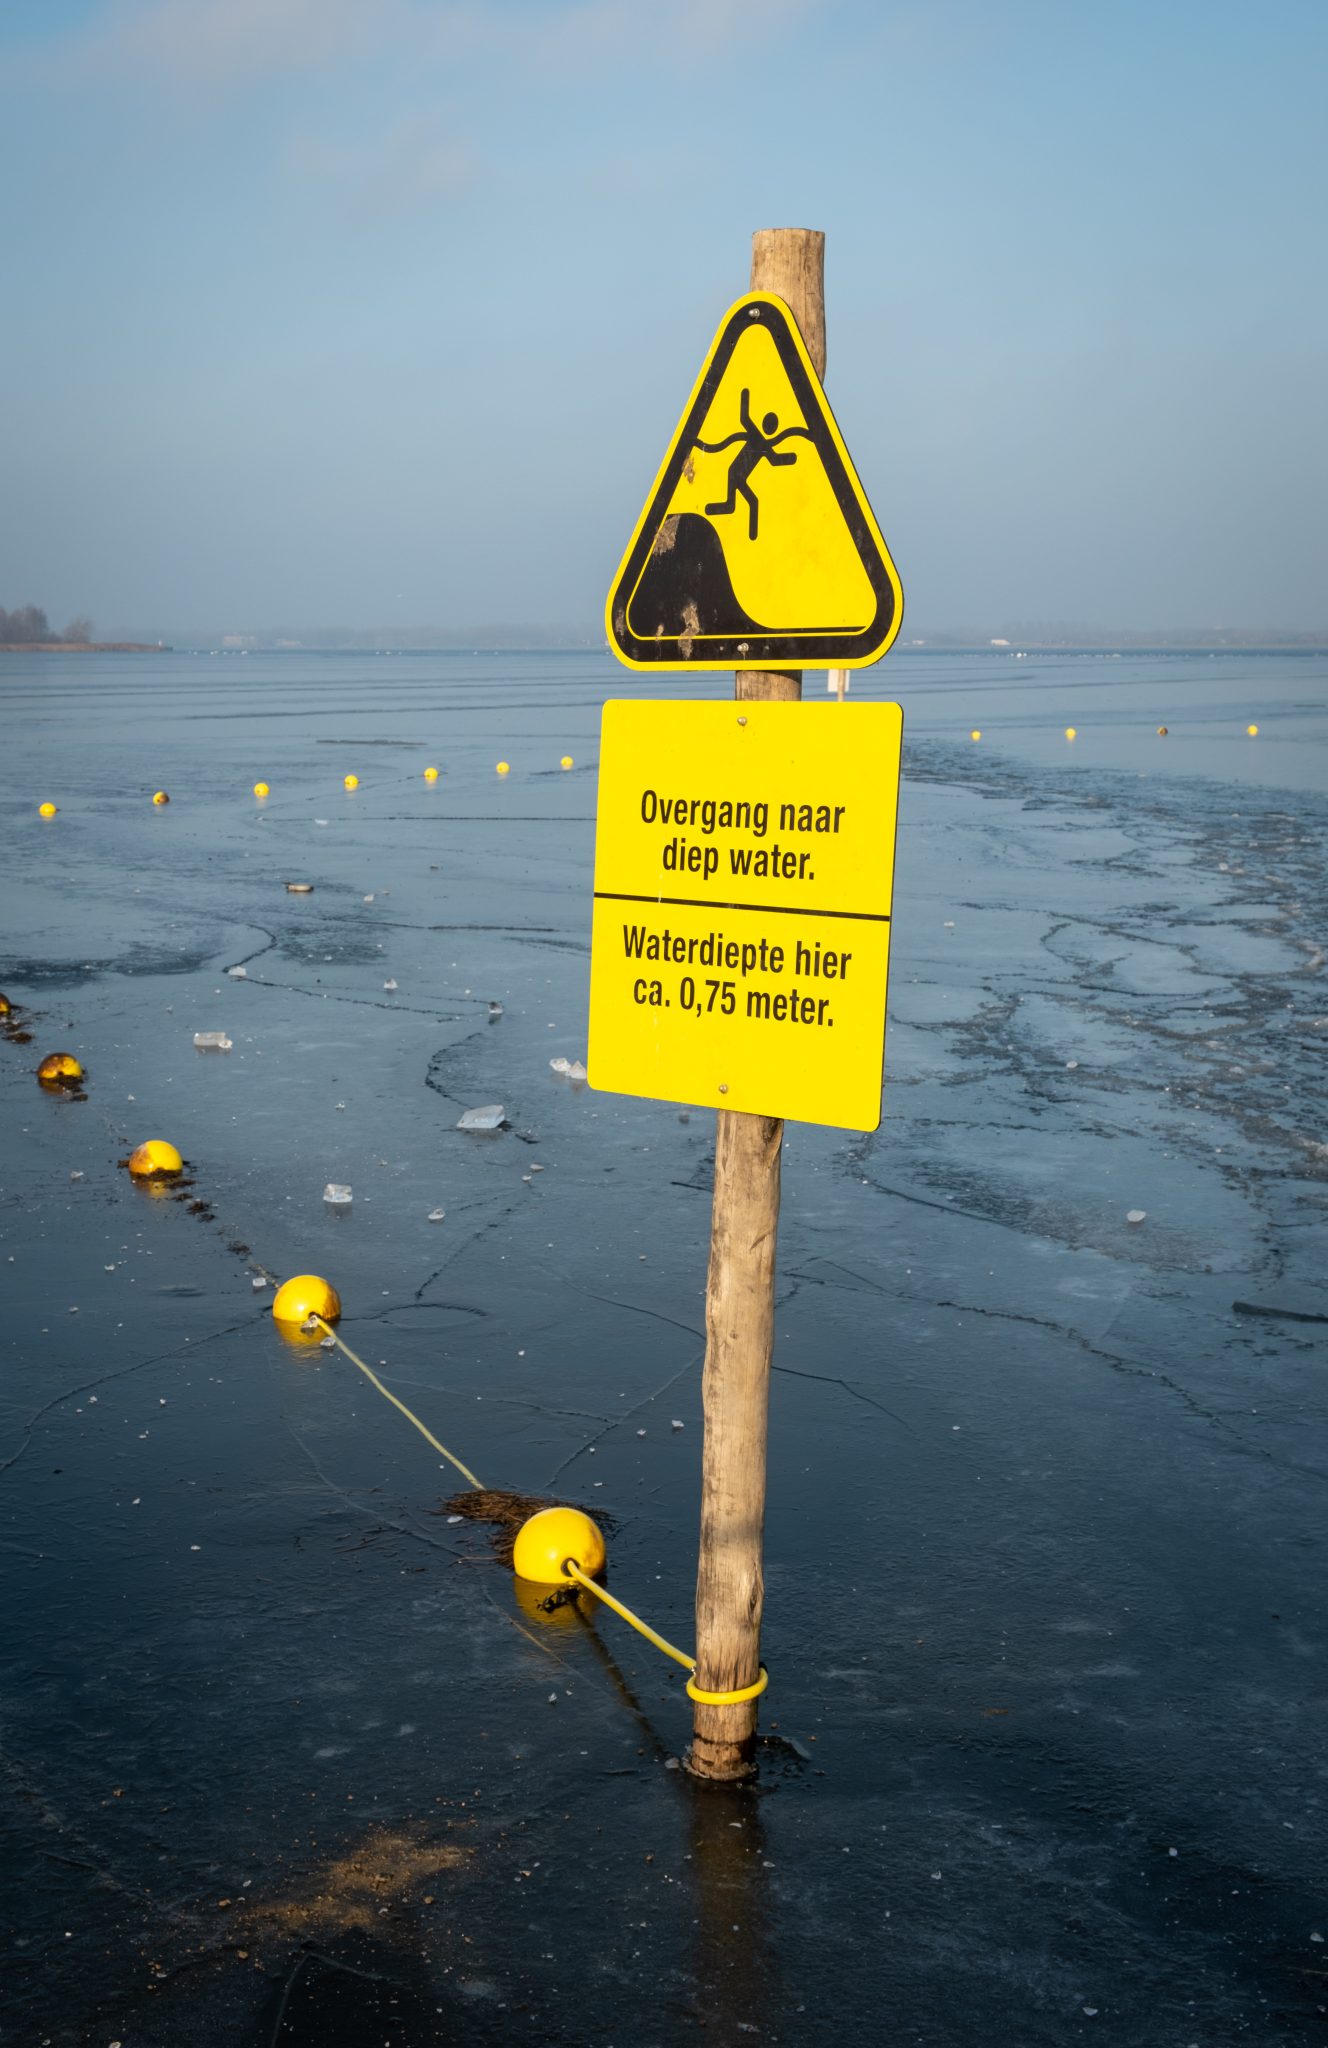 Deep water warning sign (Dutch) on a frozen lake